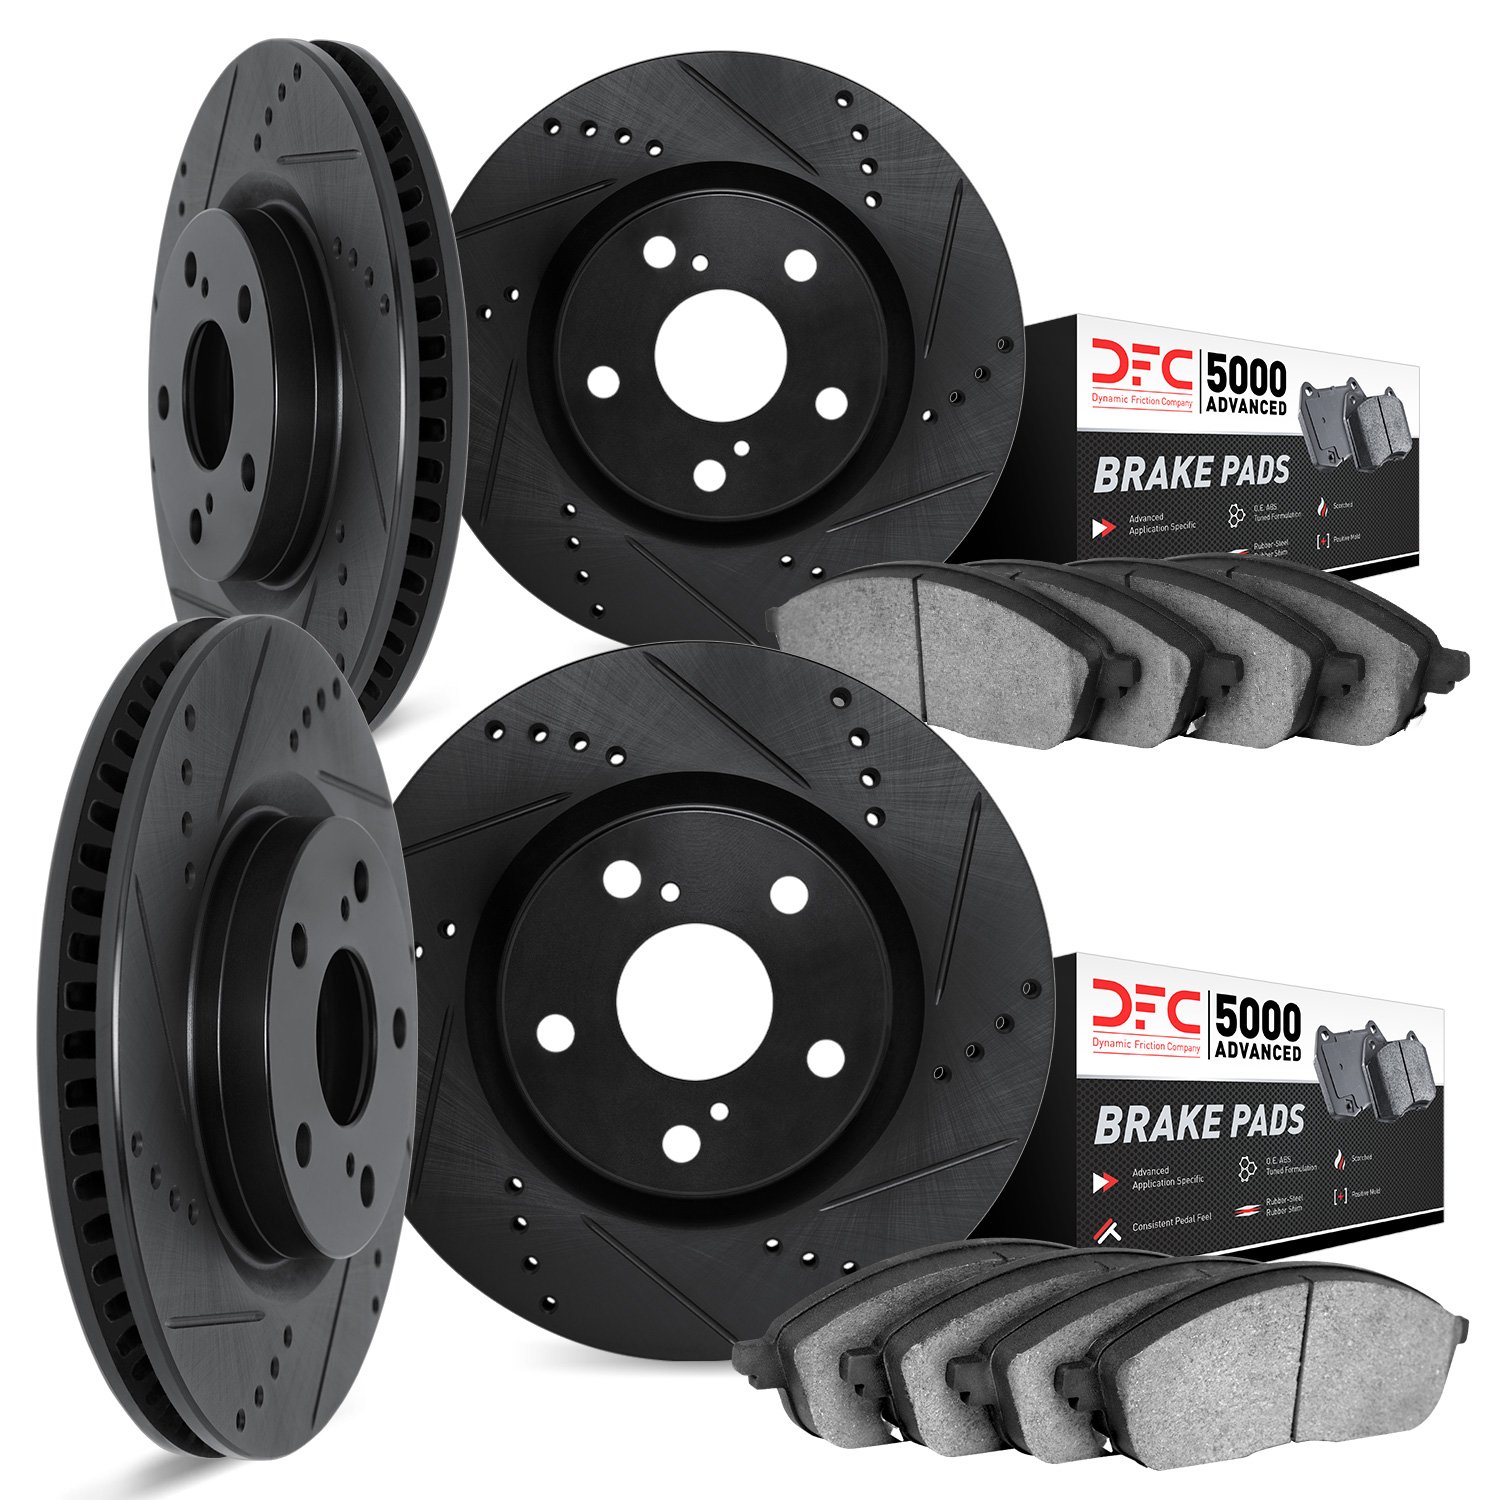 8504-54285 Drilled/Slotted Brake Rotors w/5000 Advanced Brake Pads Kit [Black], 2011-2014 Ford/Lincoln/Mercury/Mazda, Position: